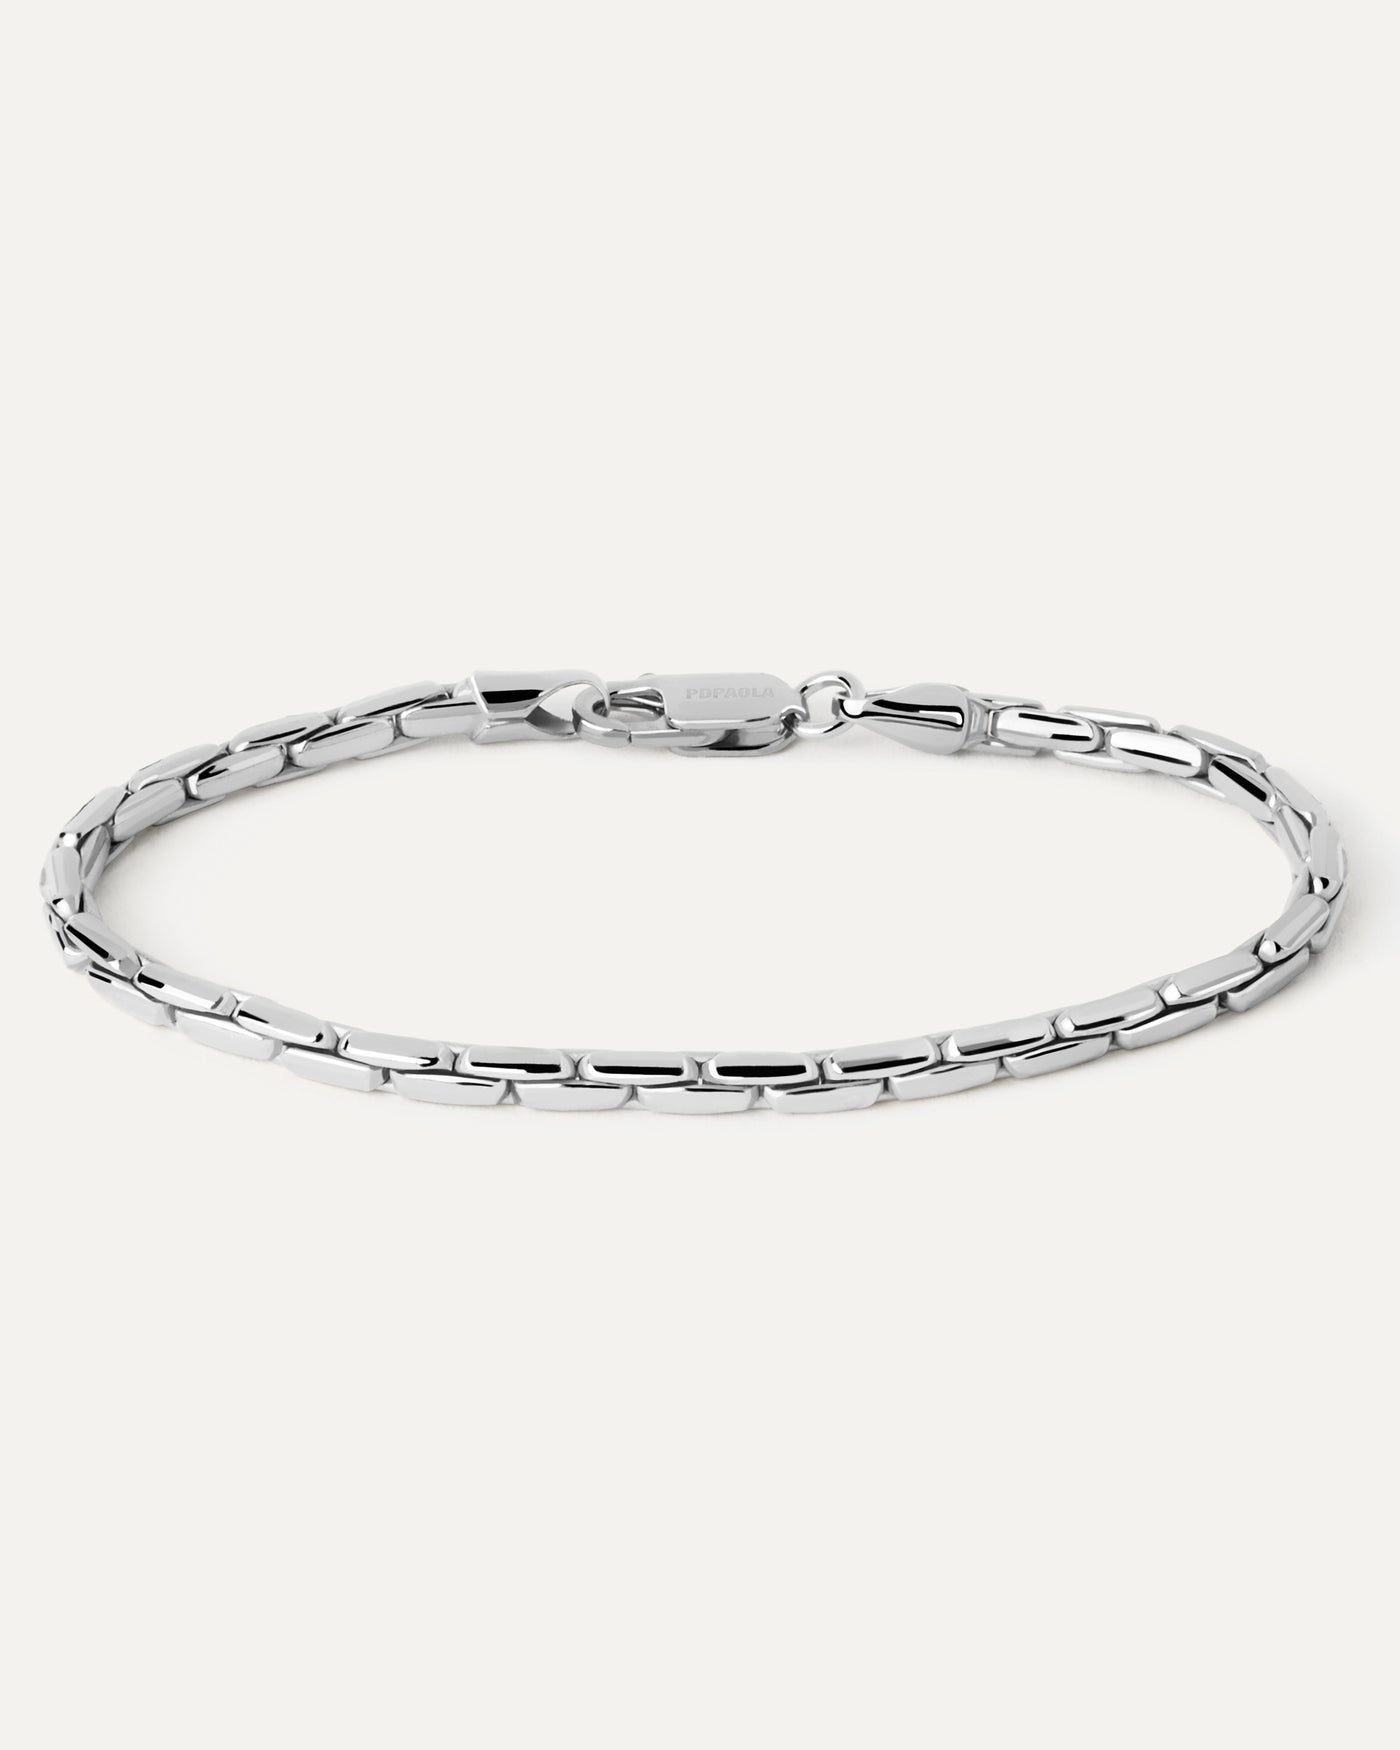 The Platinum Solid Core Bracelet - Platinum Wristwear & Bracelets - Men of  Platinum